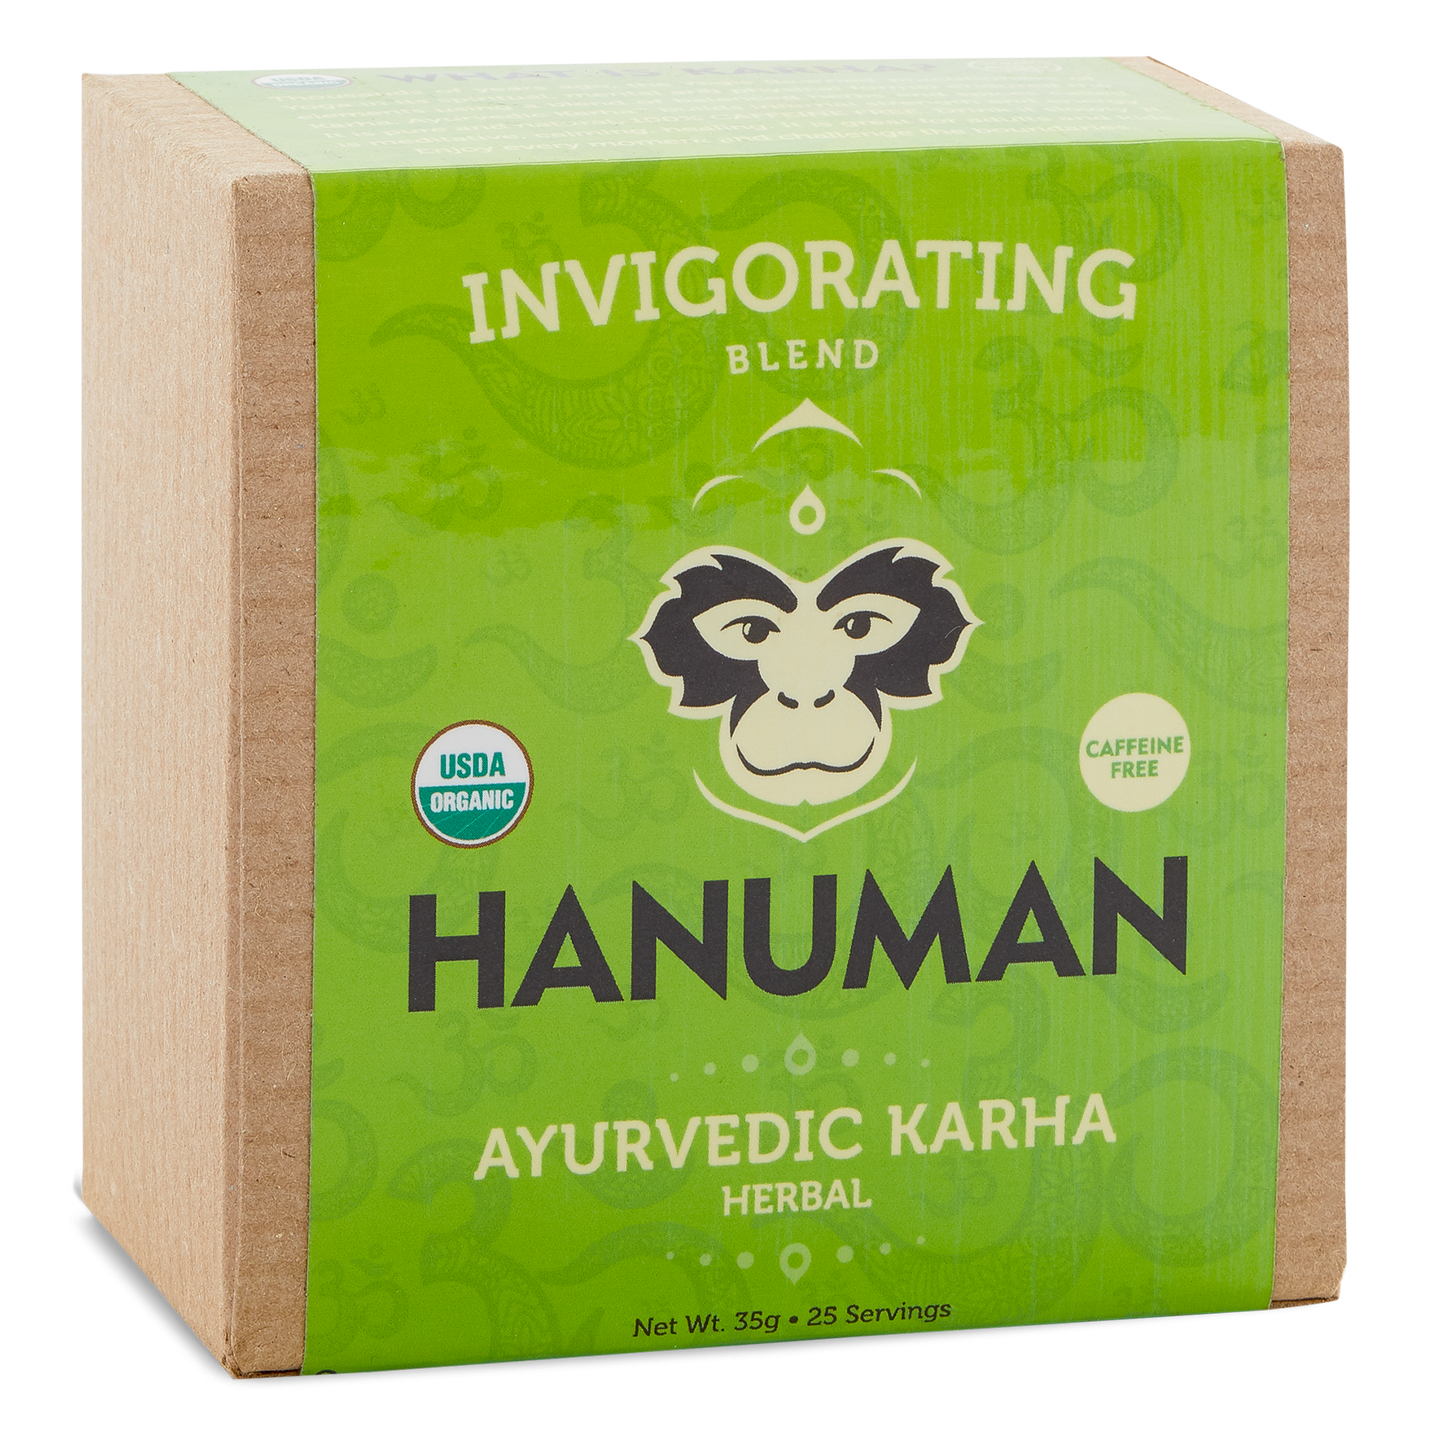 Ayurvedic & Organic Karha: Invigorating (Spices, No Caffeine)